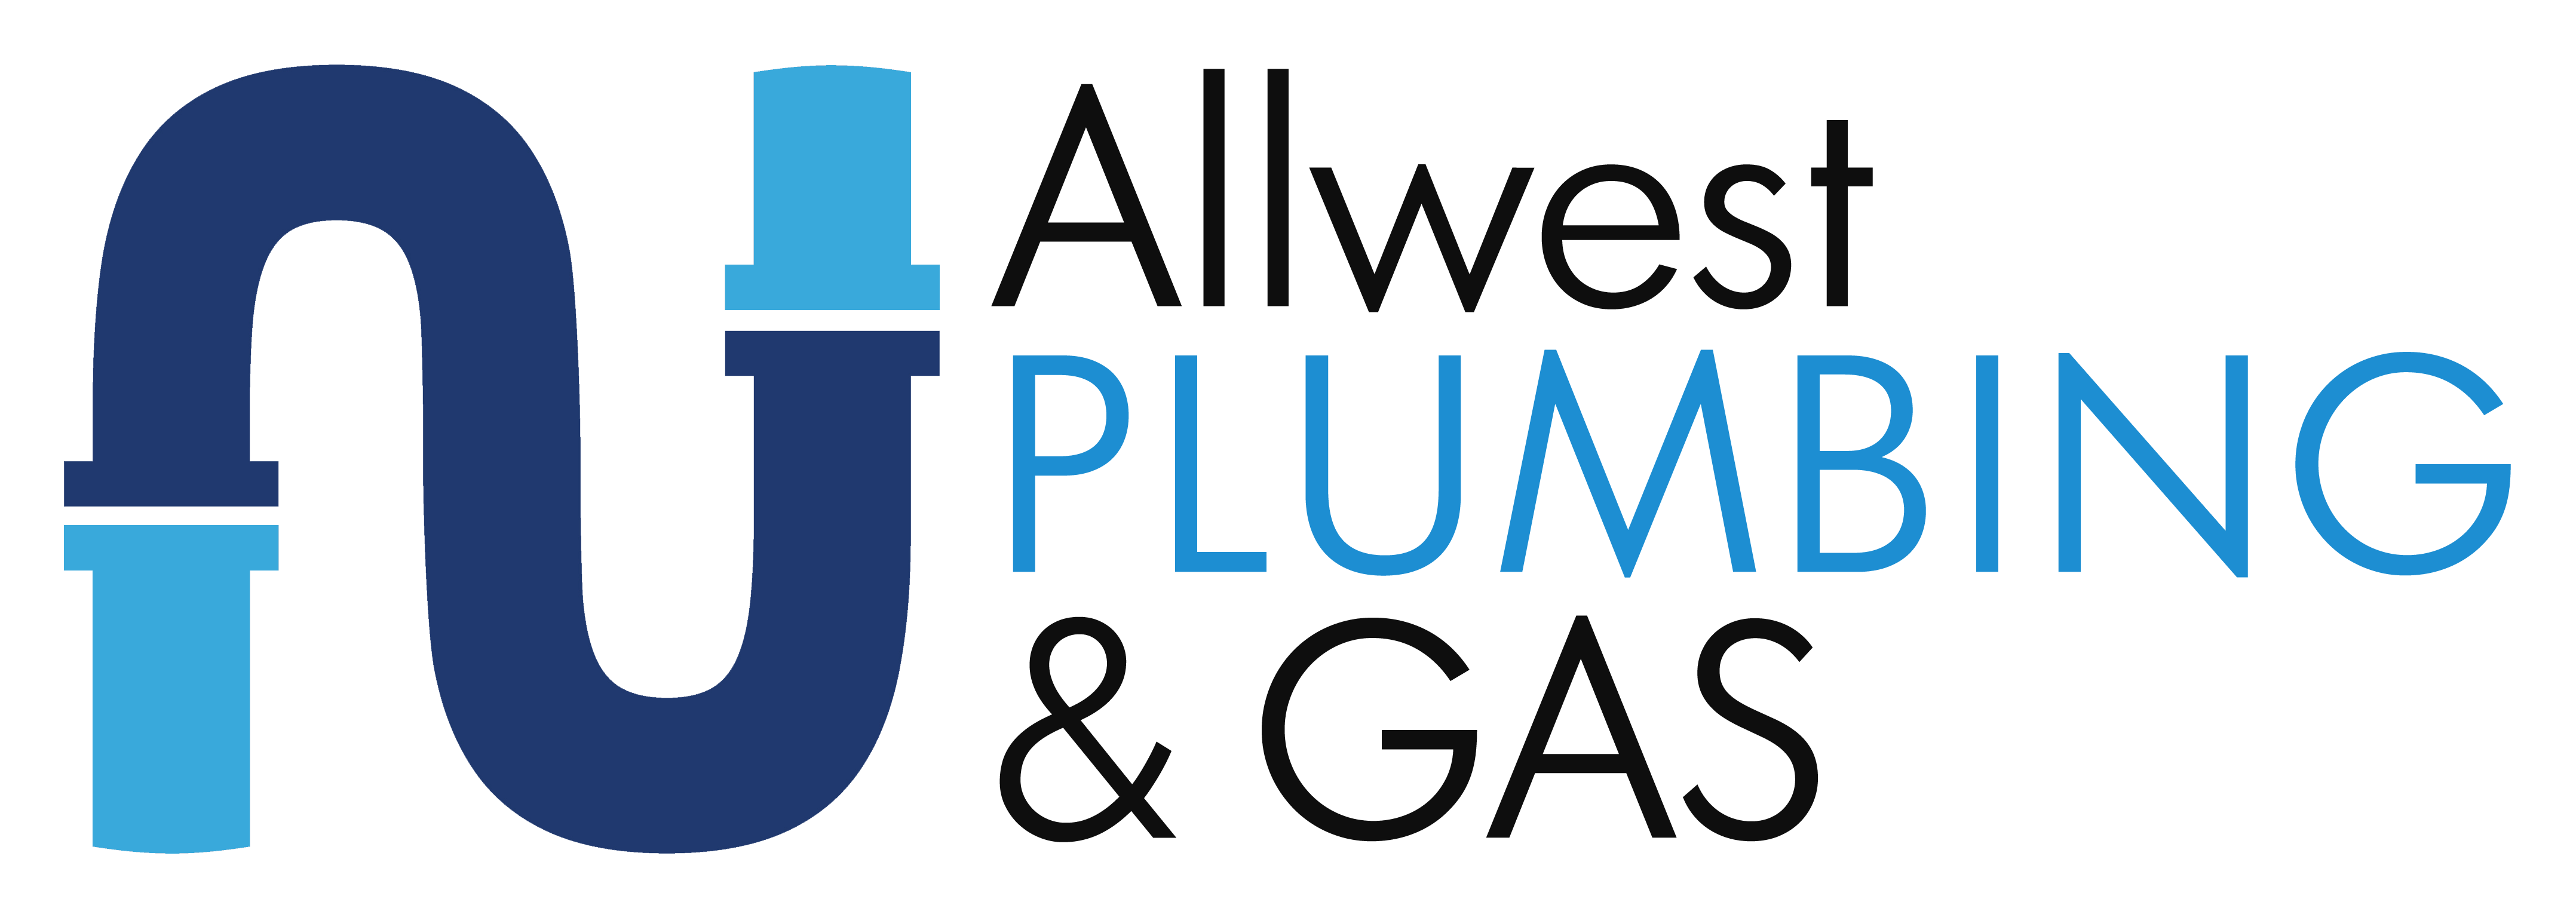 Pipe Logo - PIPE LOGO FINAL no background | Allwest Plumbing & Gas